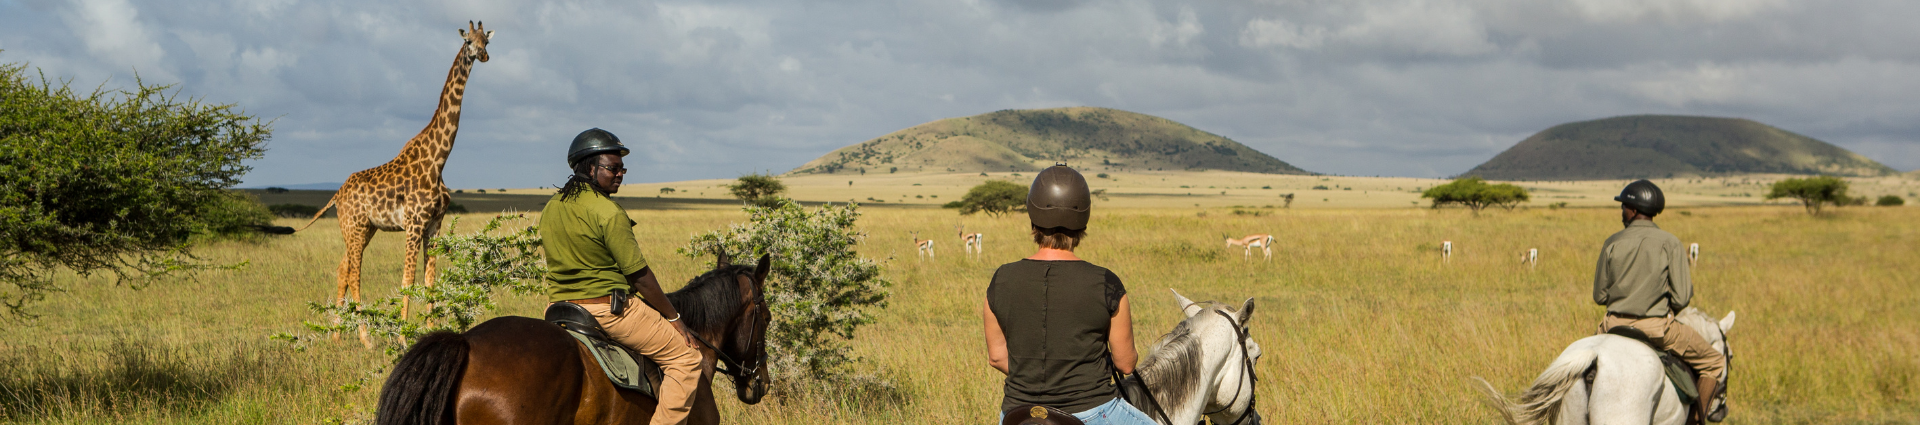 Nos randonnées équestres au Kenya